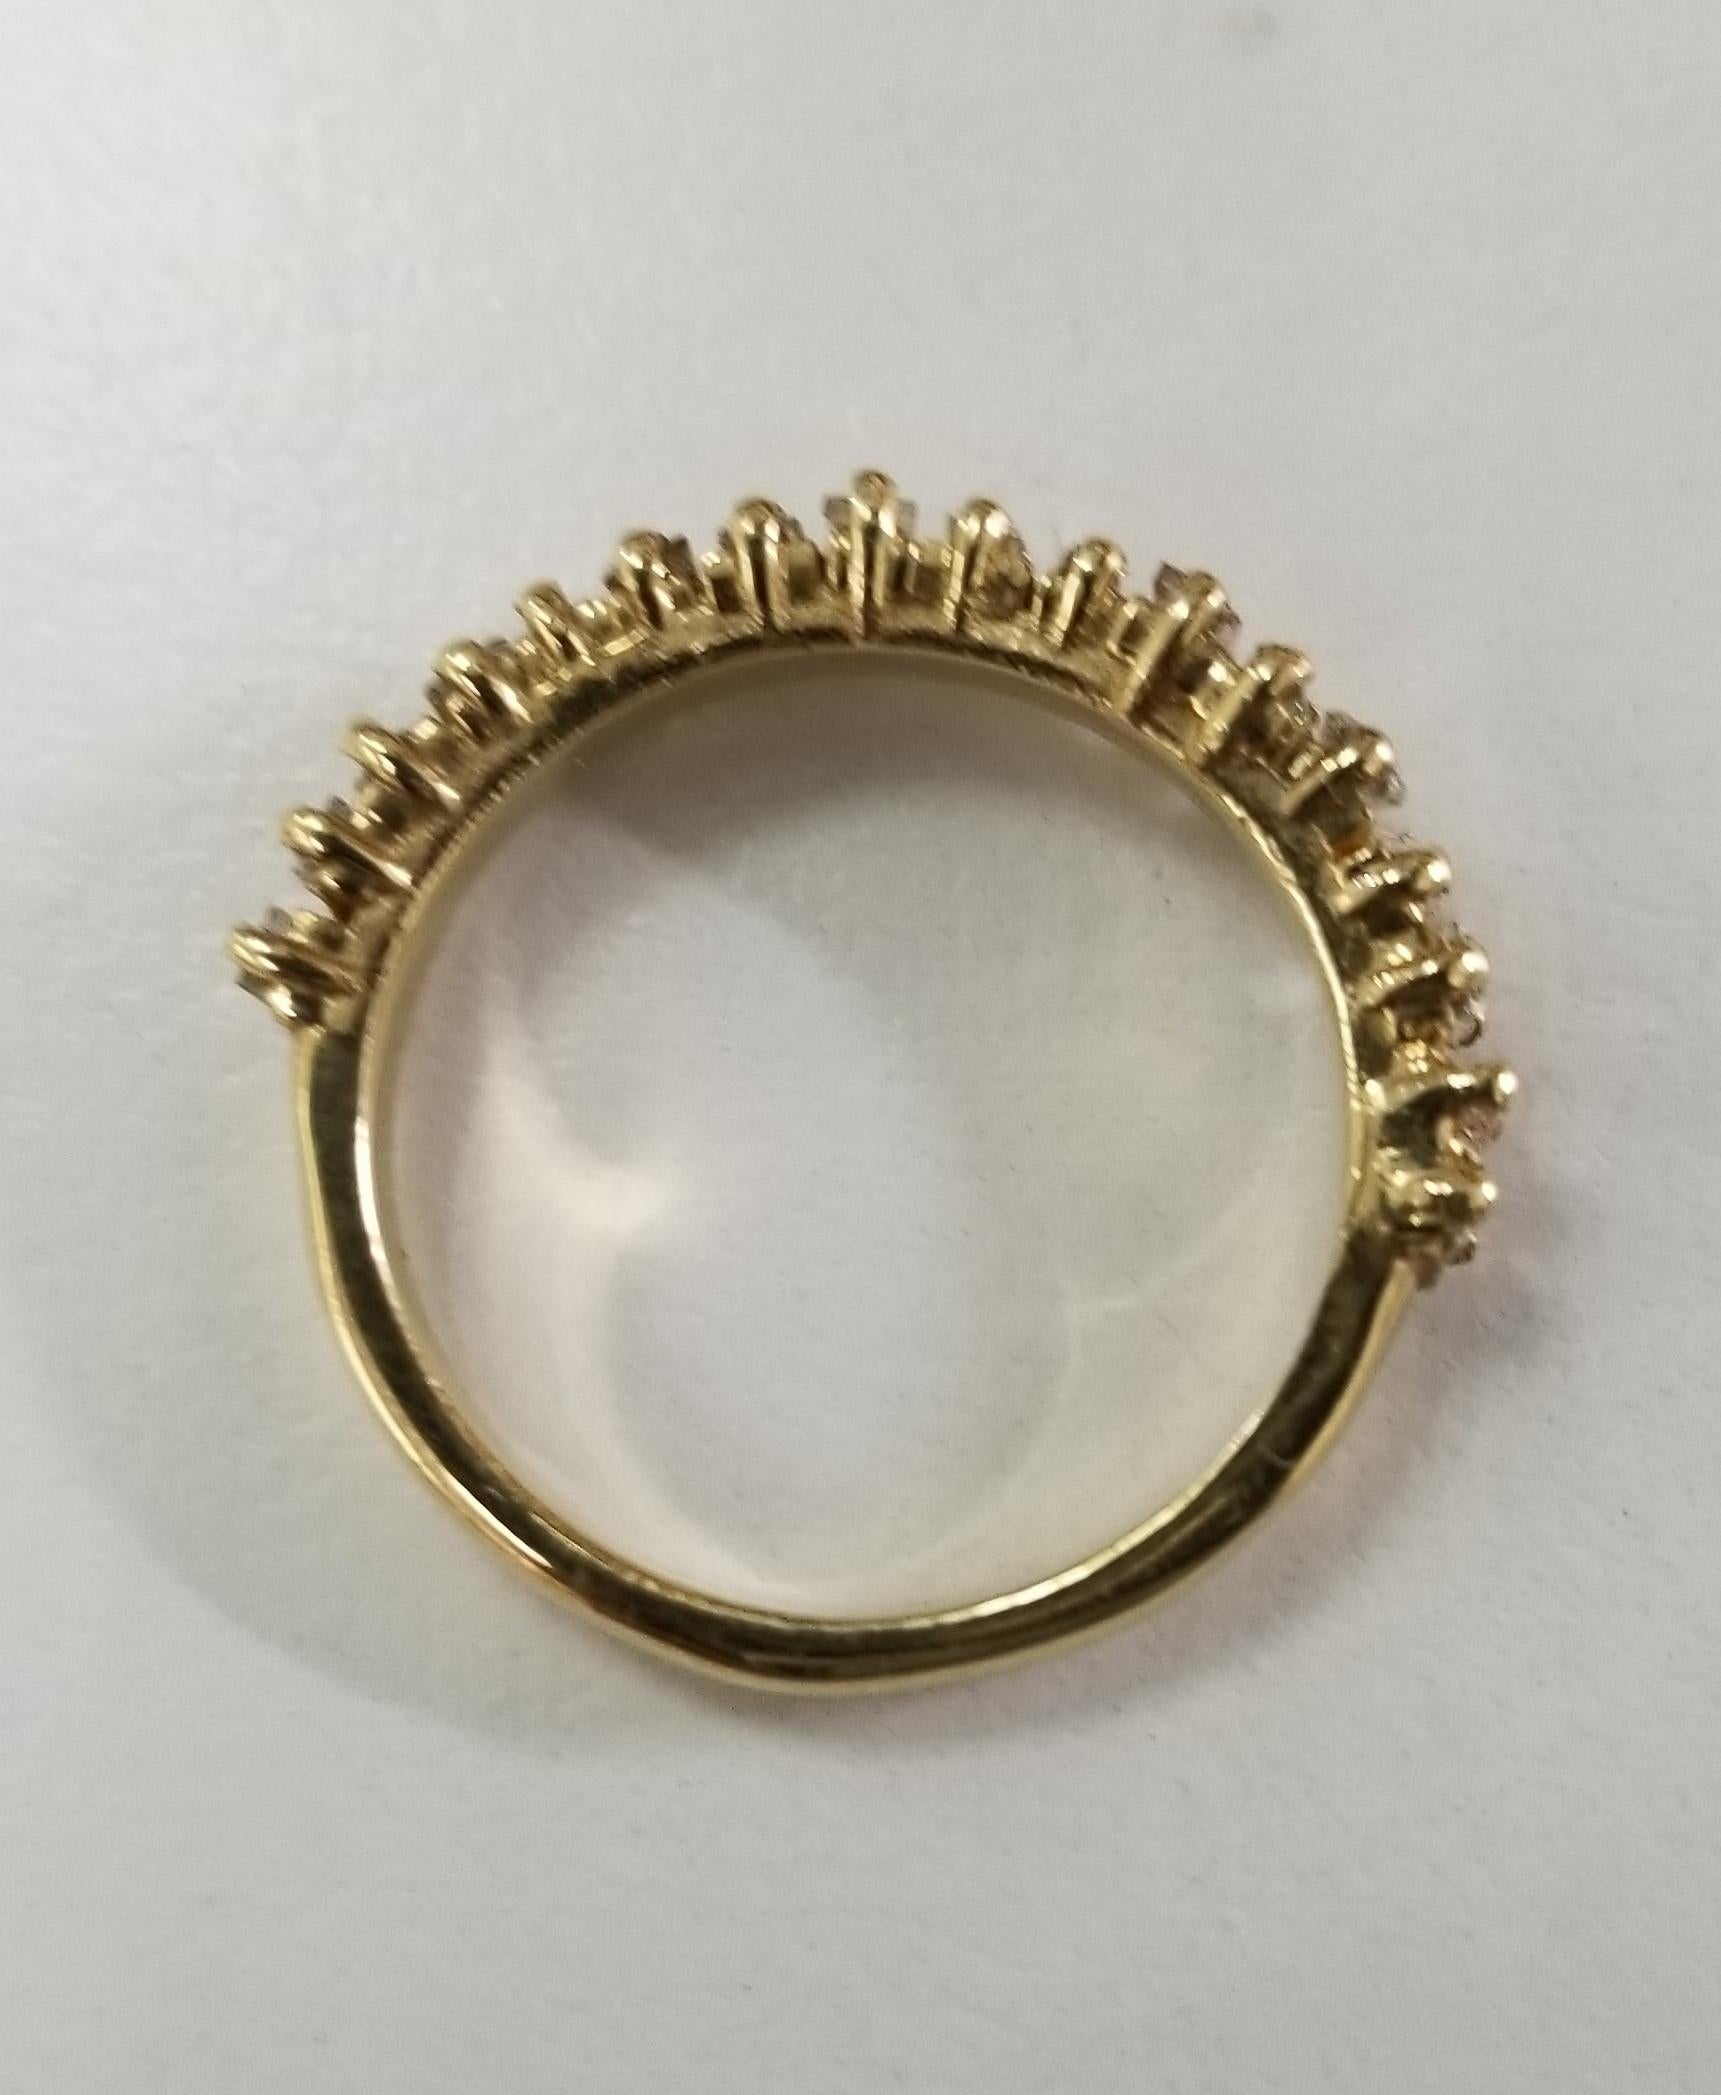 2 carat baguette diamond ring